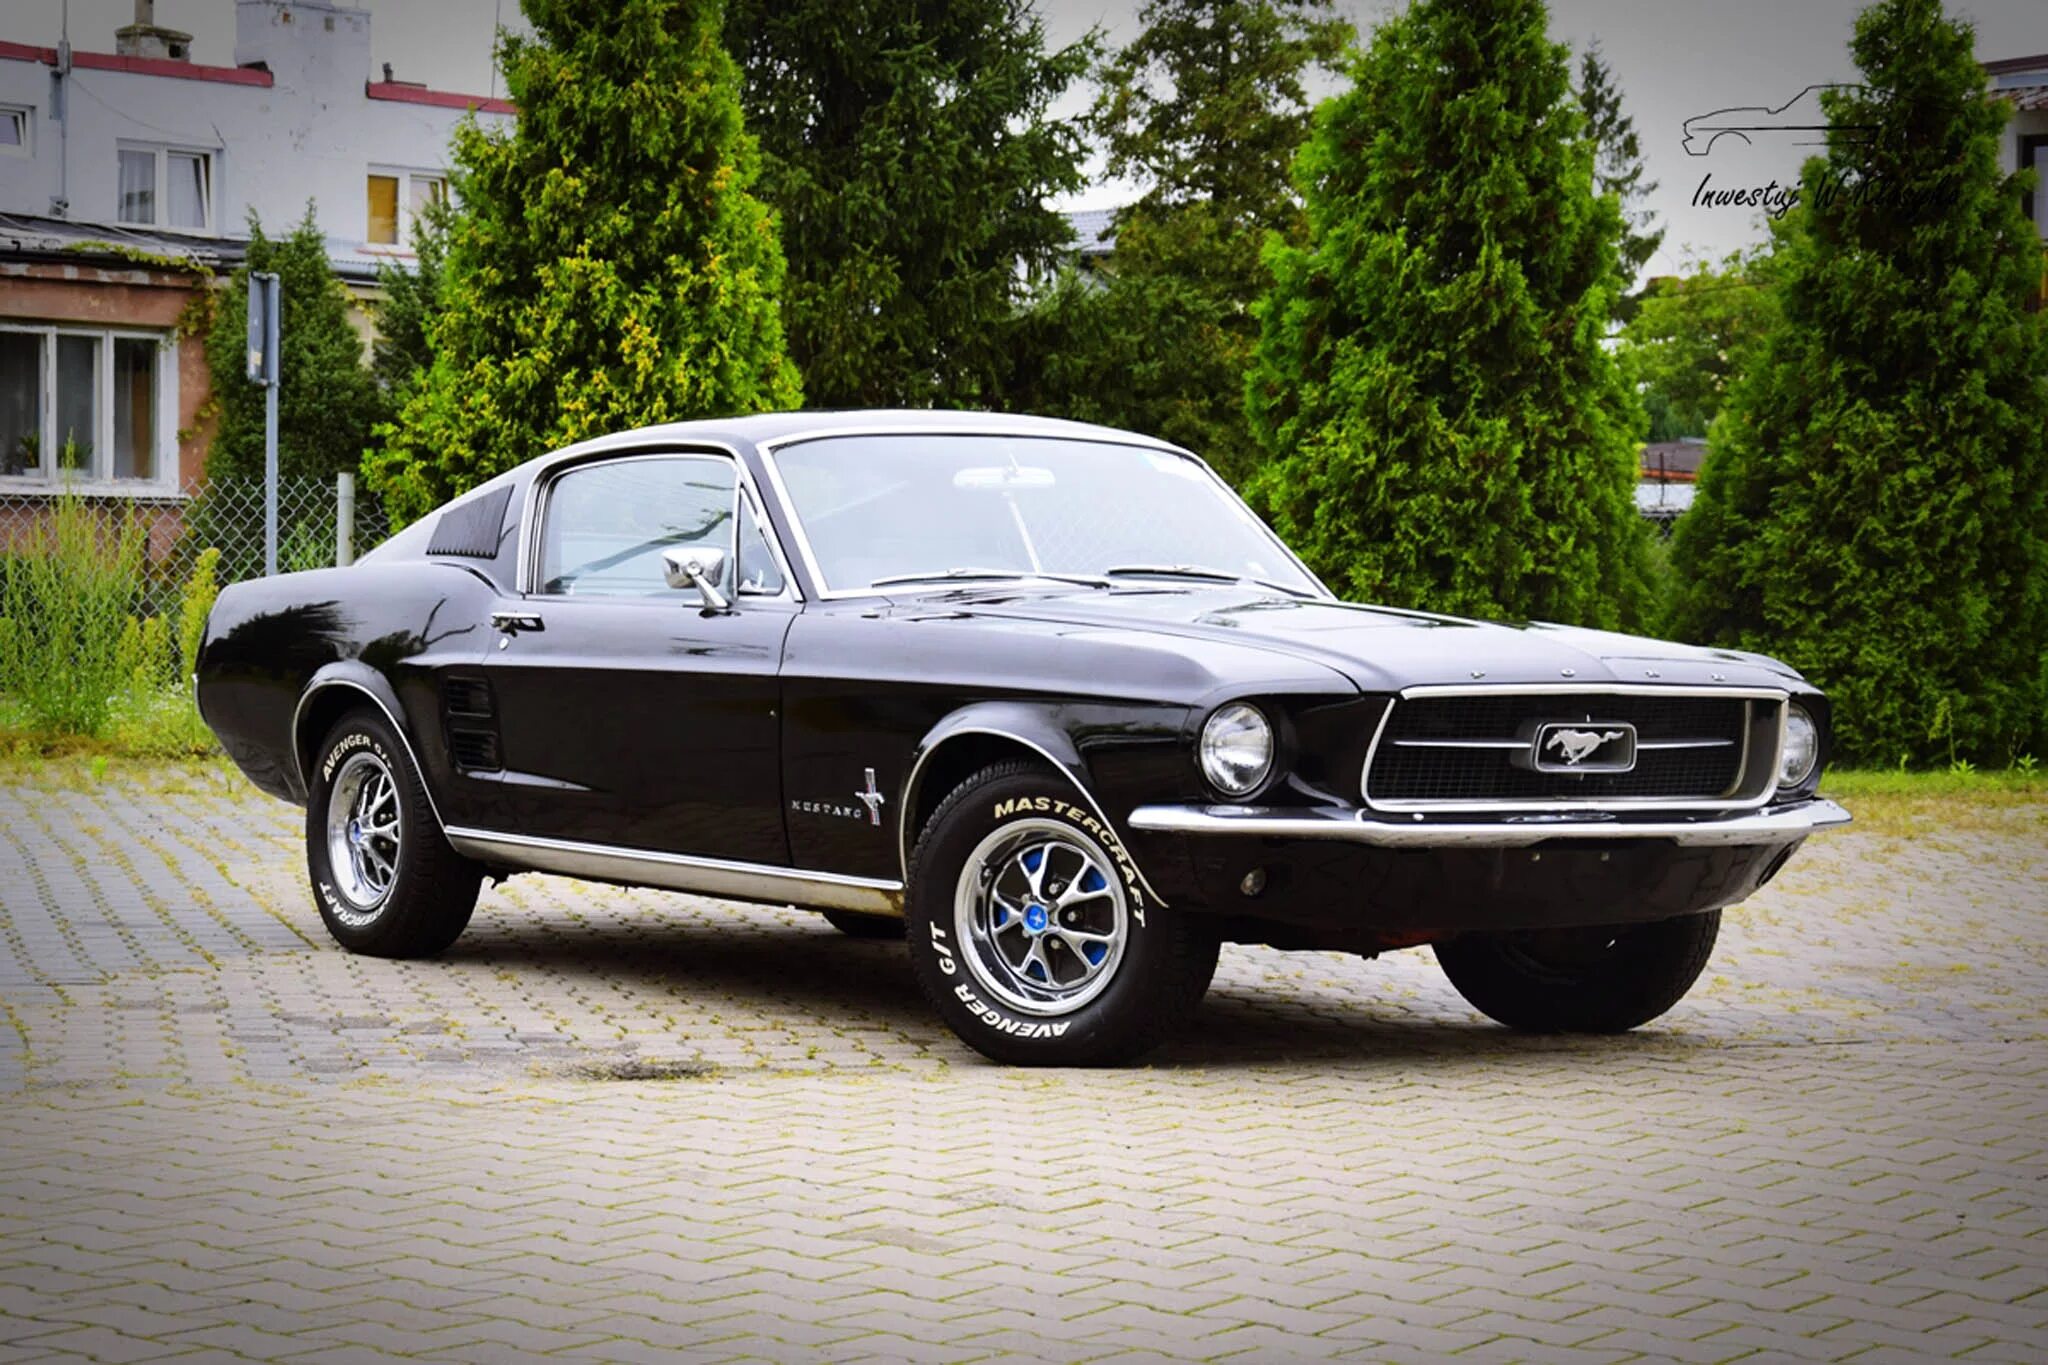 Ford Mustang 1967. Форд Мустанг 1967 Мустанг. Мустанг Fastback 1967. Легендарный Форд Мустанг 1967. Fast back